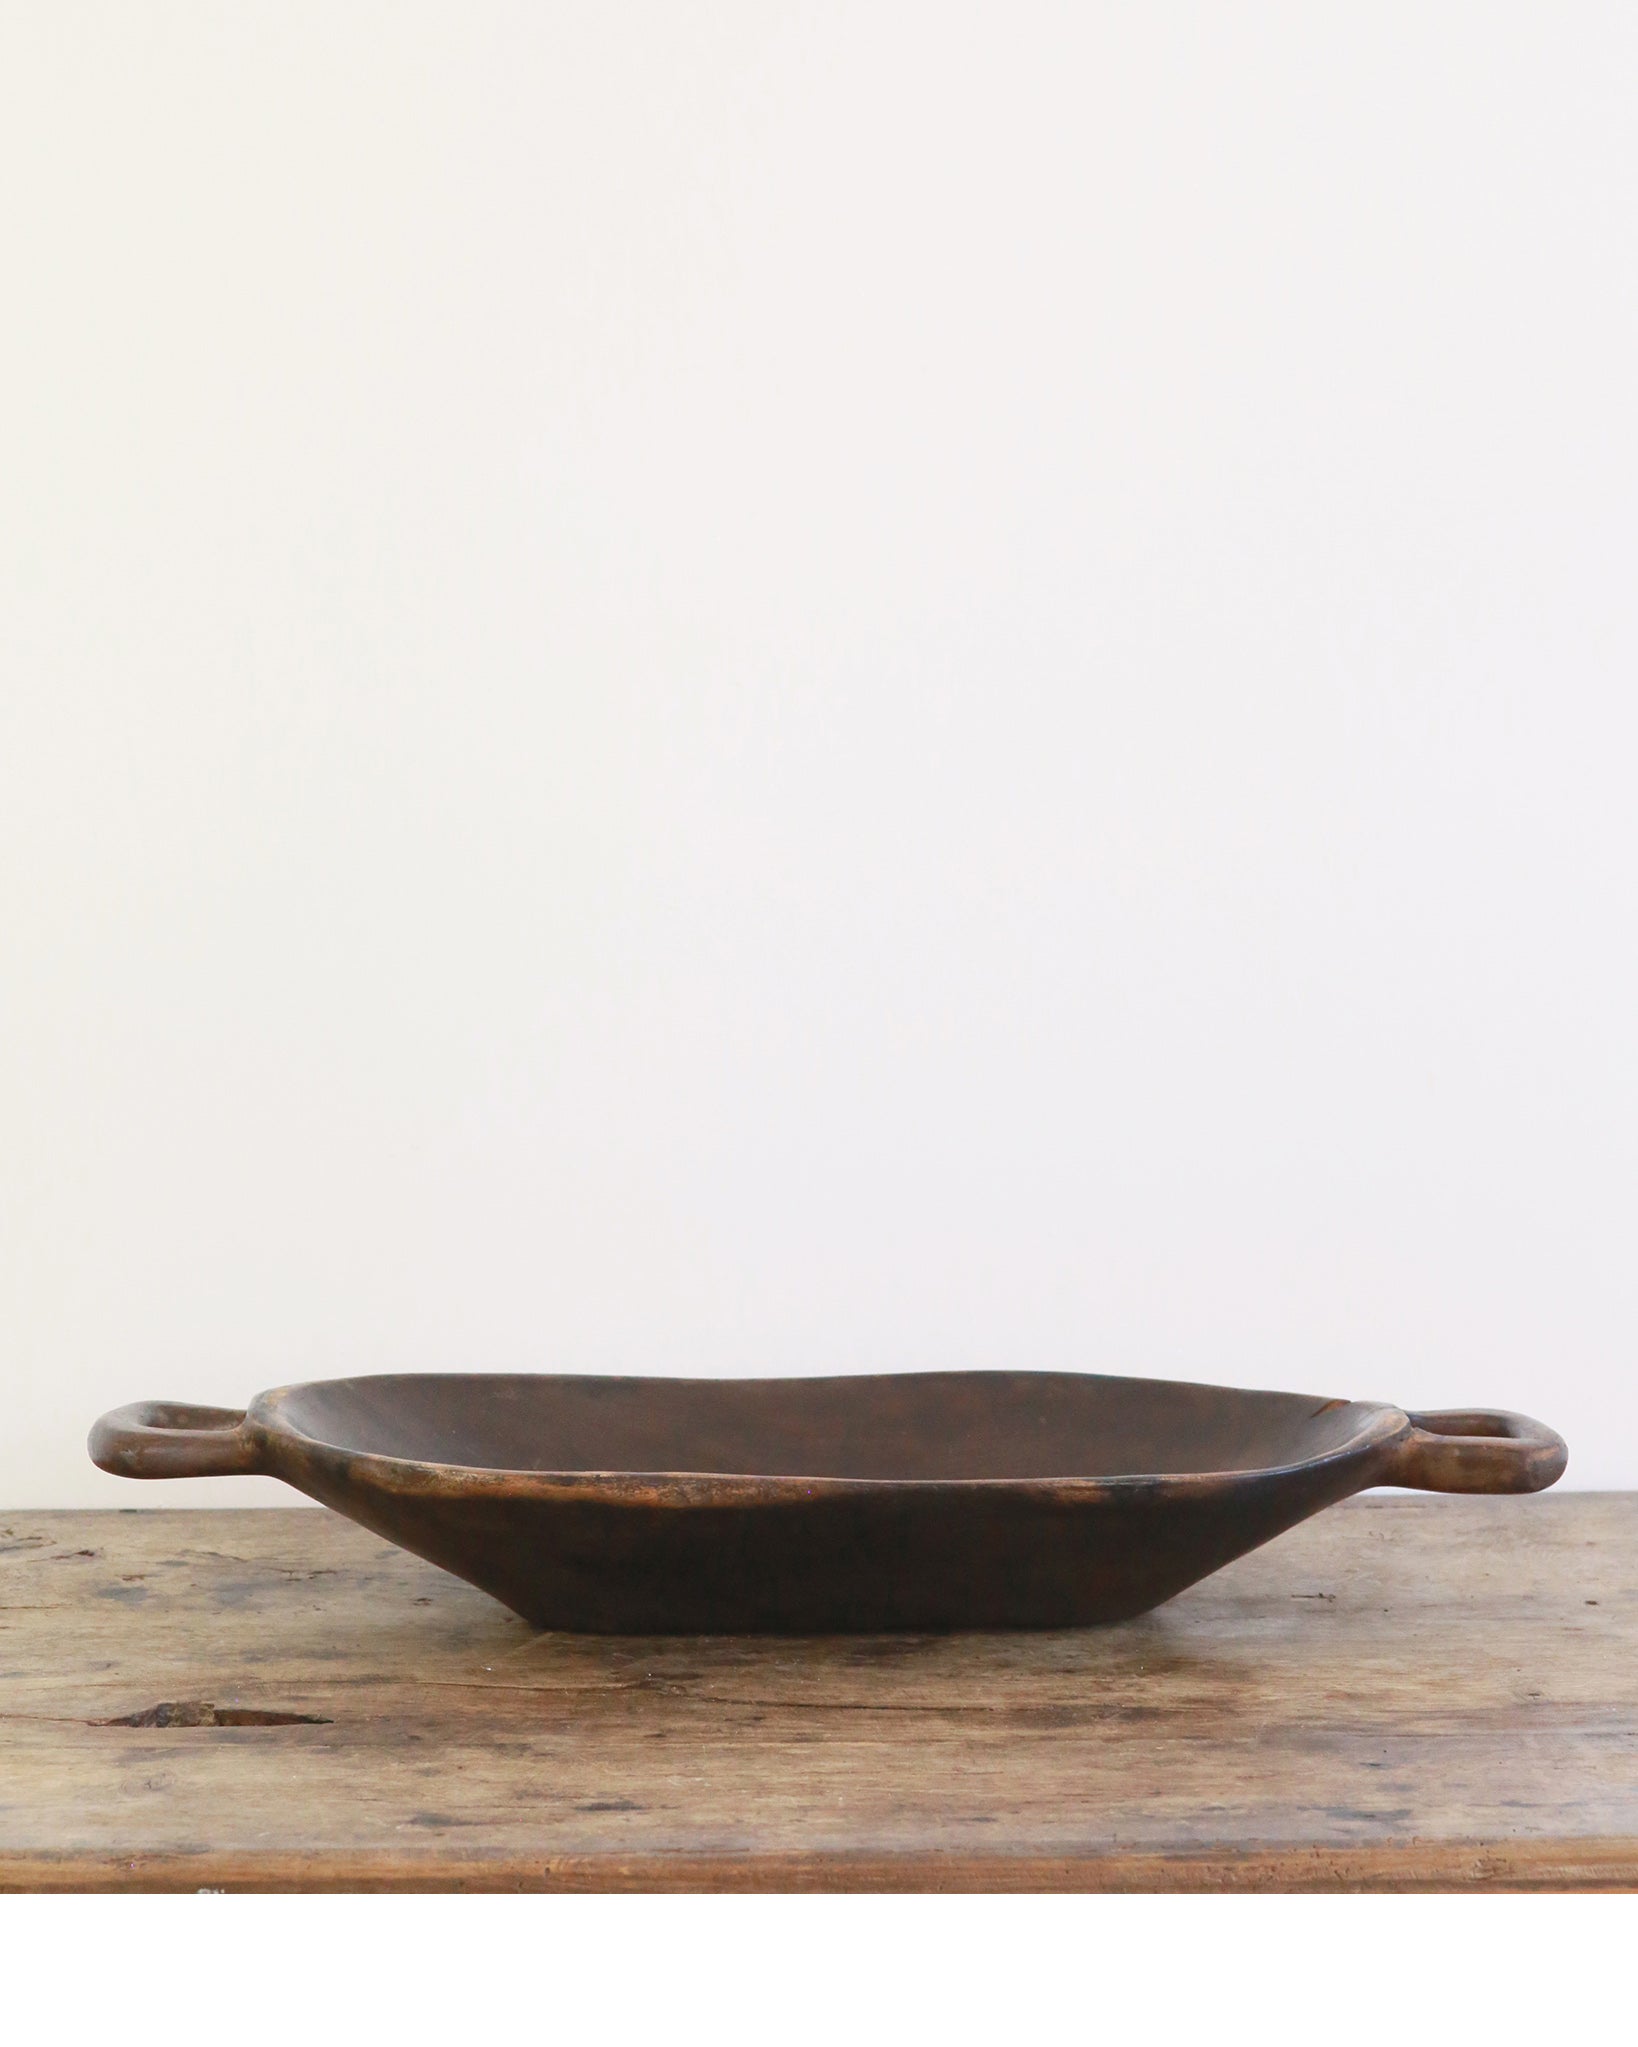 Vintage dark polished wooden bowl with handles